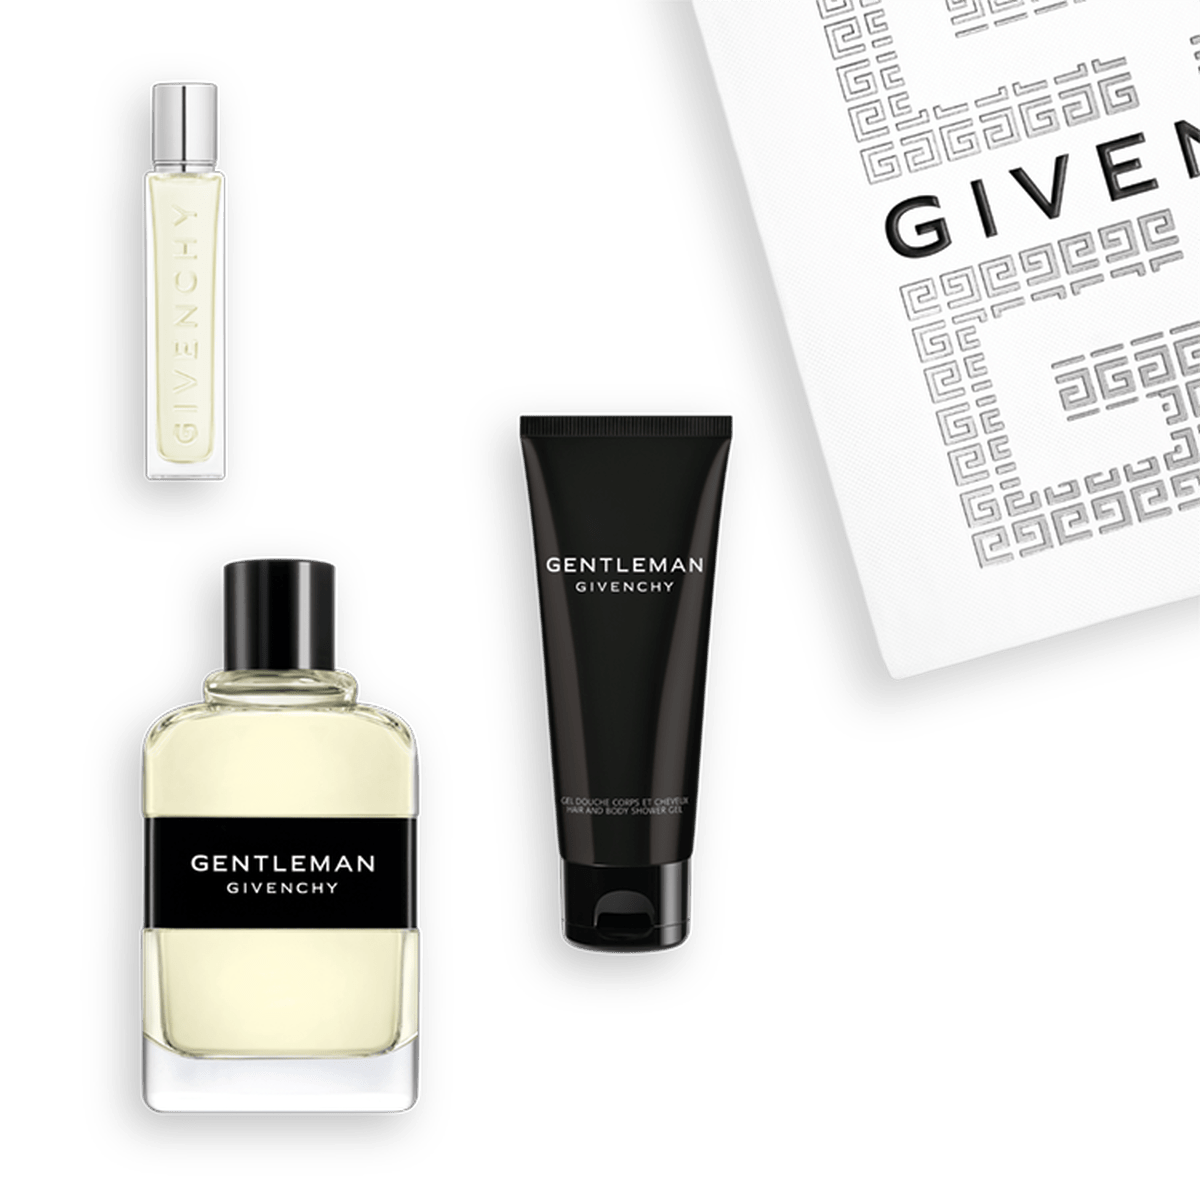 Givenchy Gentleman EDT Shower Gel Travel Set | My Perfume Shop Australia